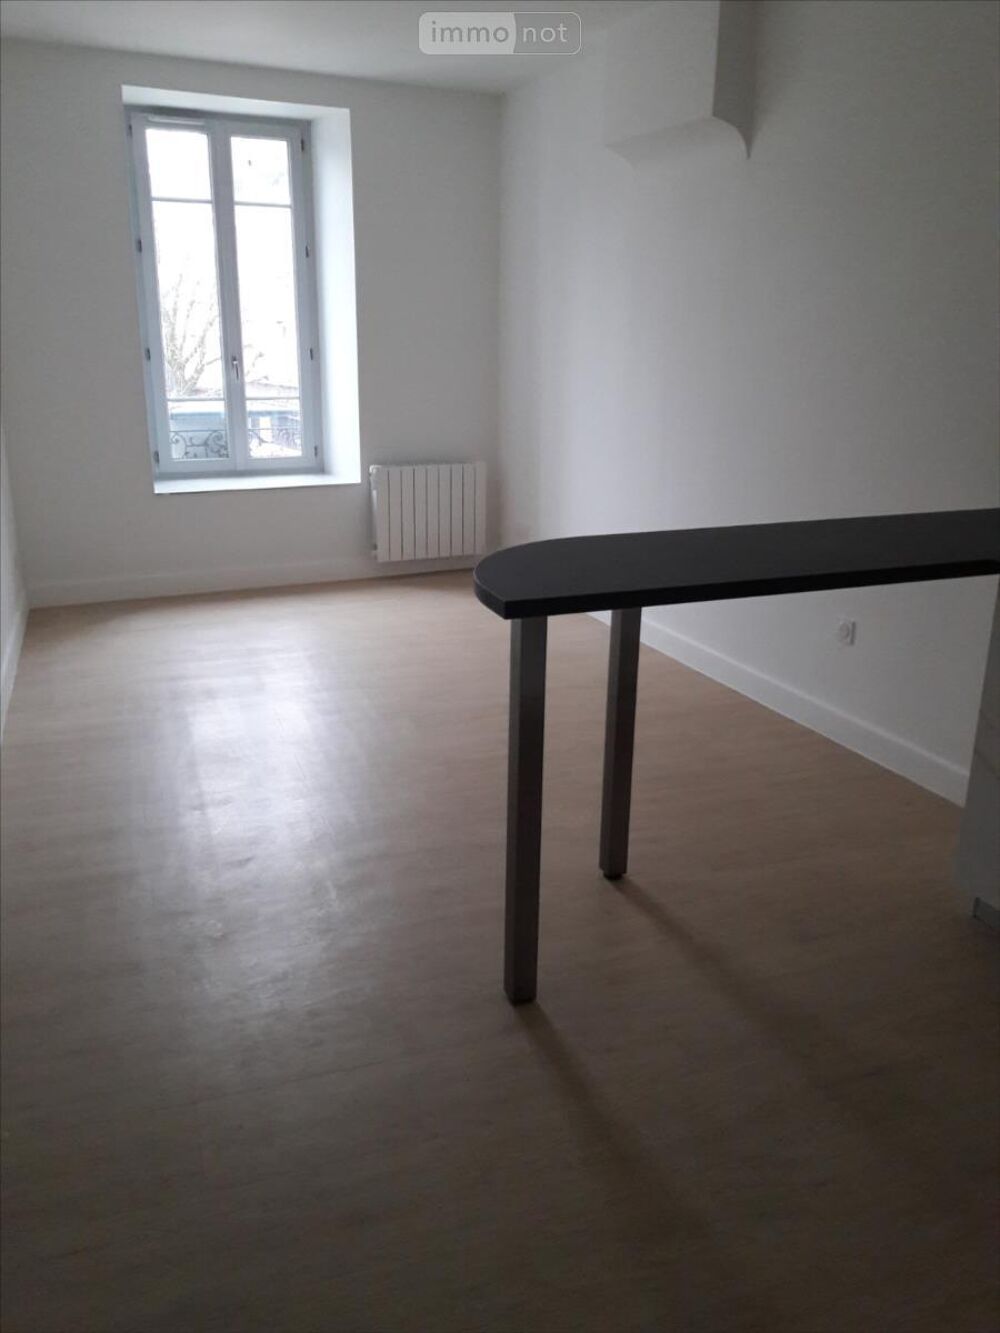 location Appartement - 1 pice(s) - 26 m Bourg-en-Bresse (01000)